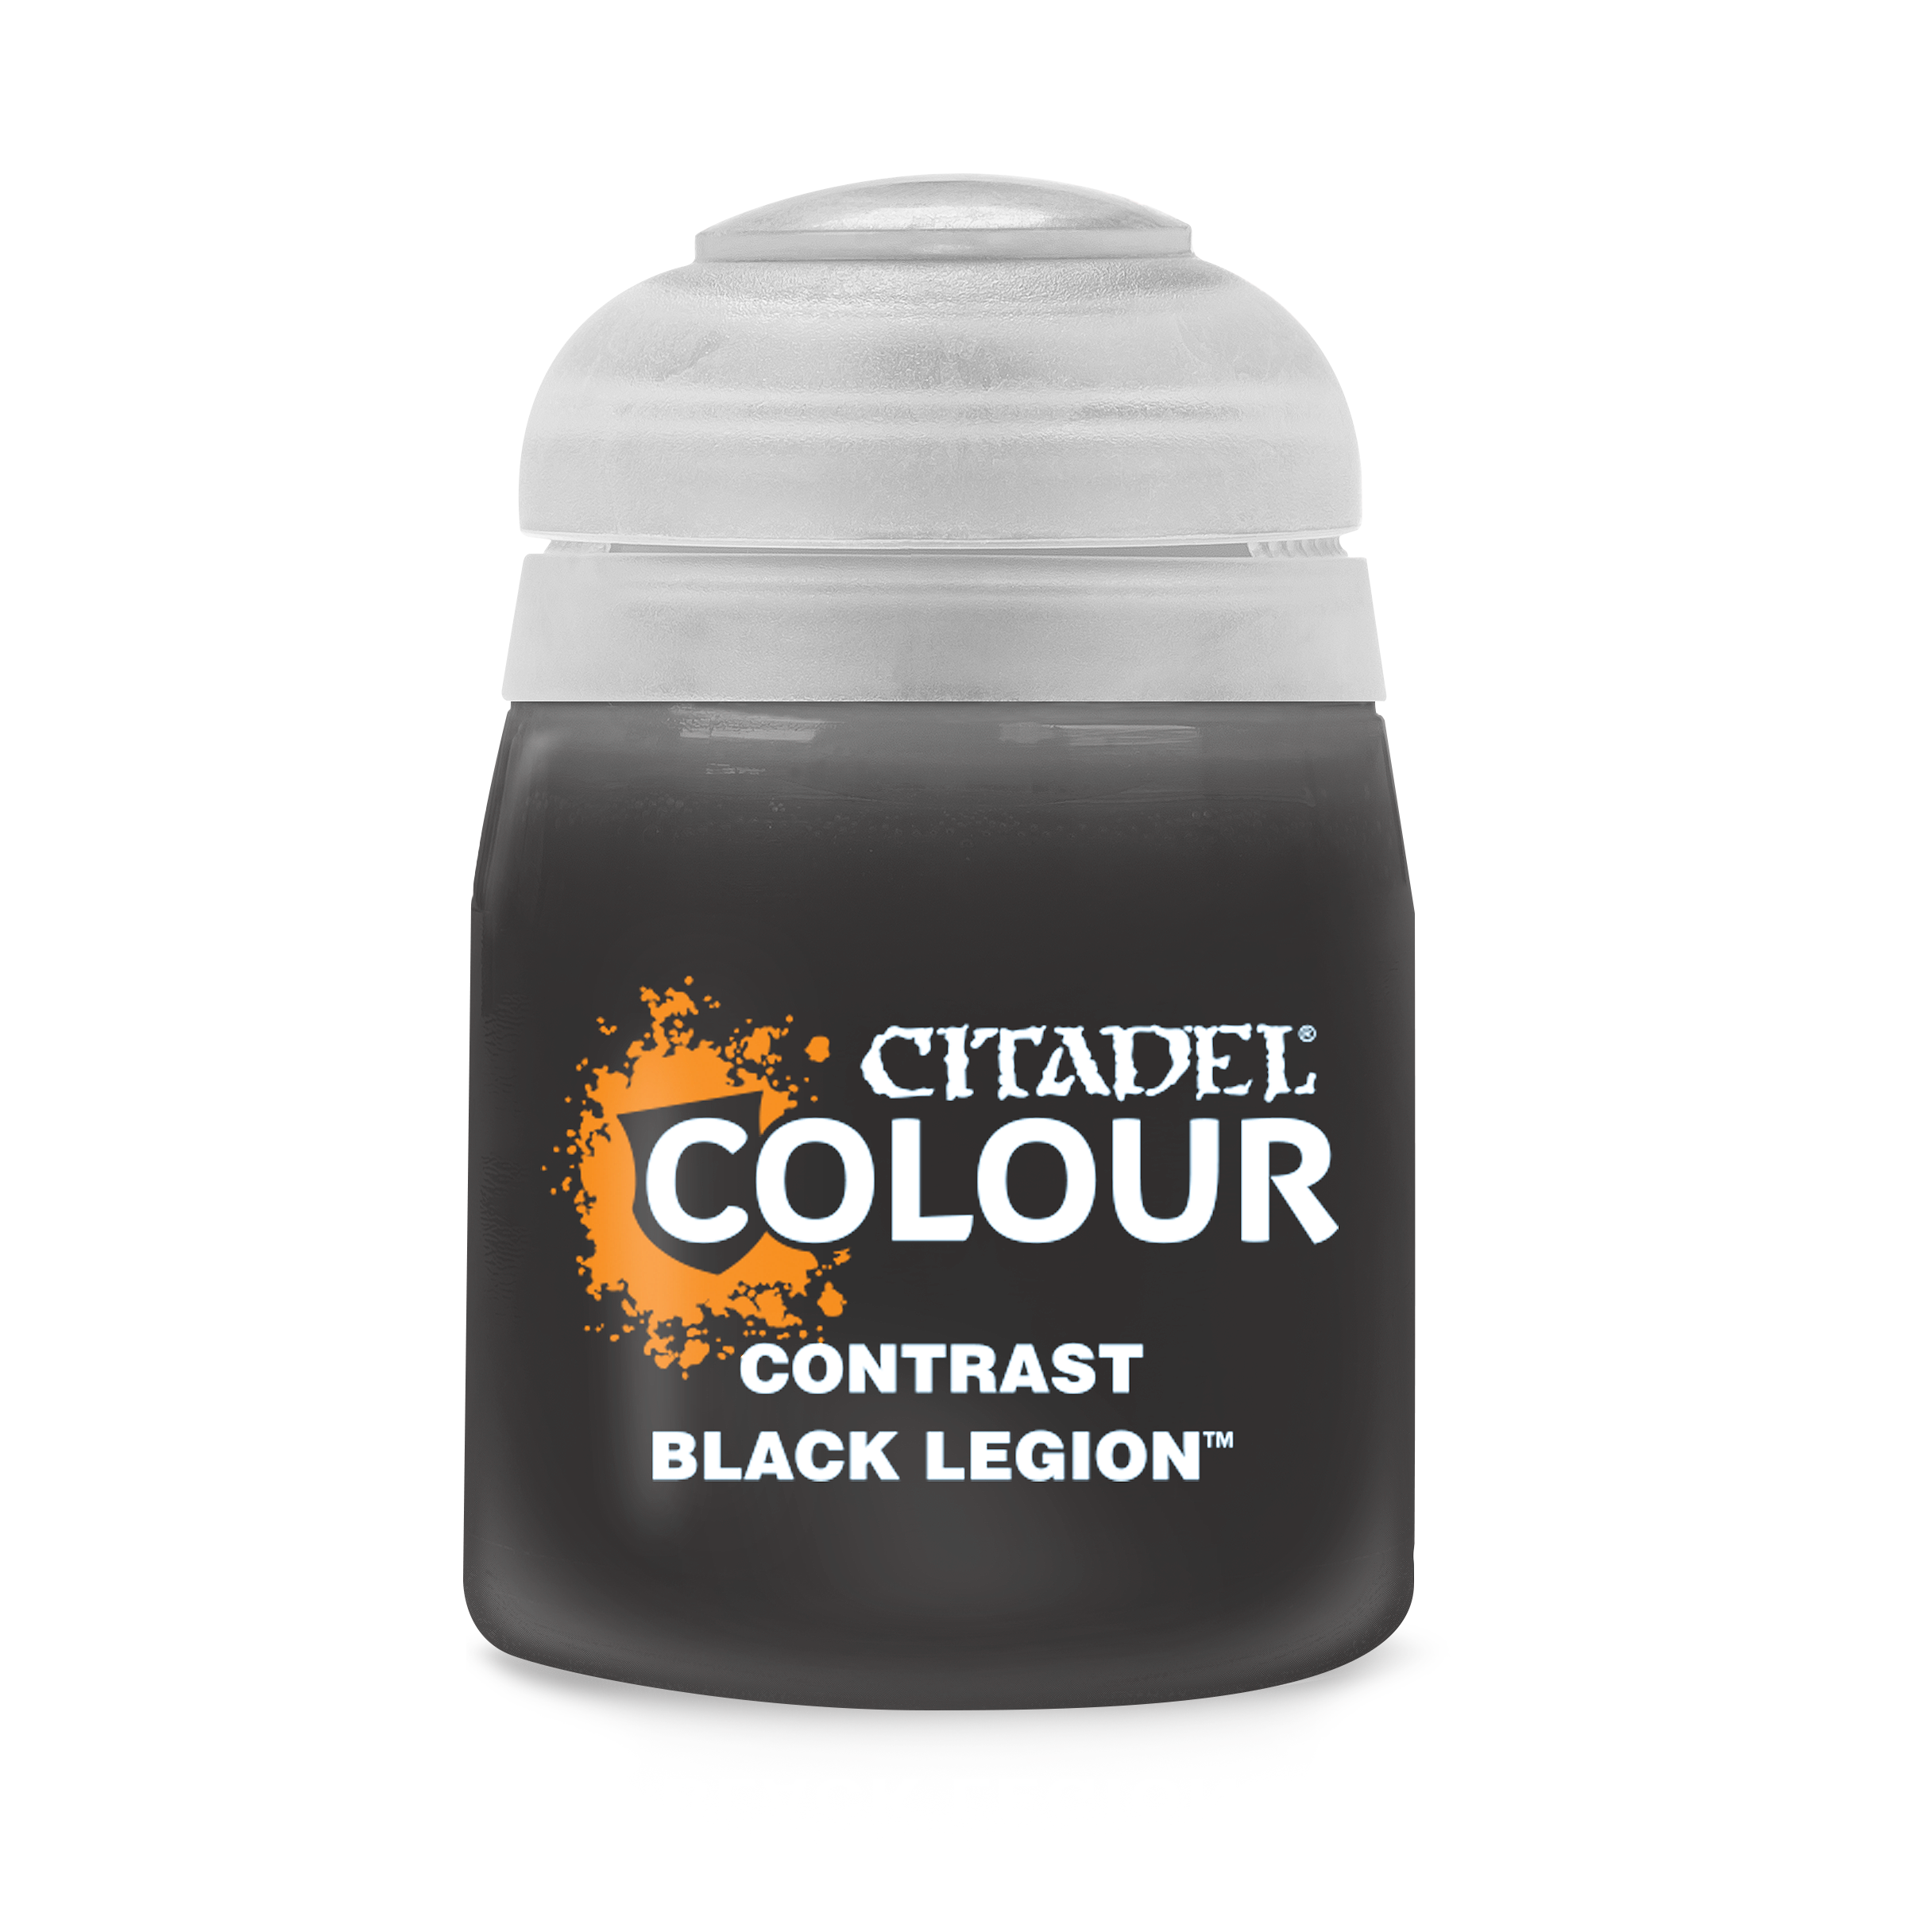 Games Workshop Citadel Colour - Chaos Black Primer / Undercoat Spray